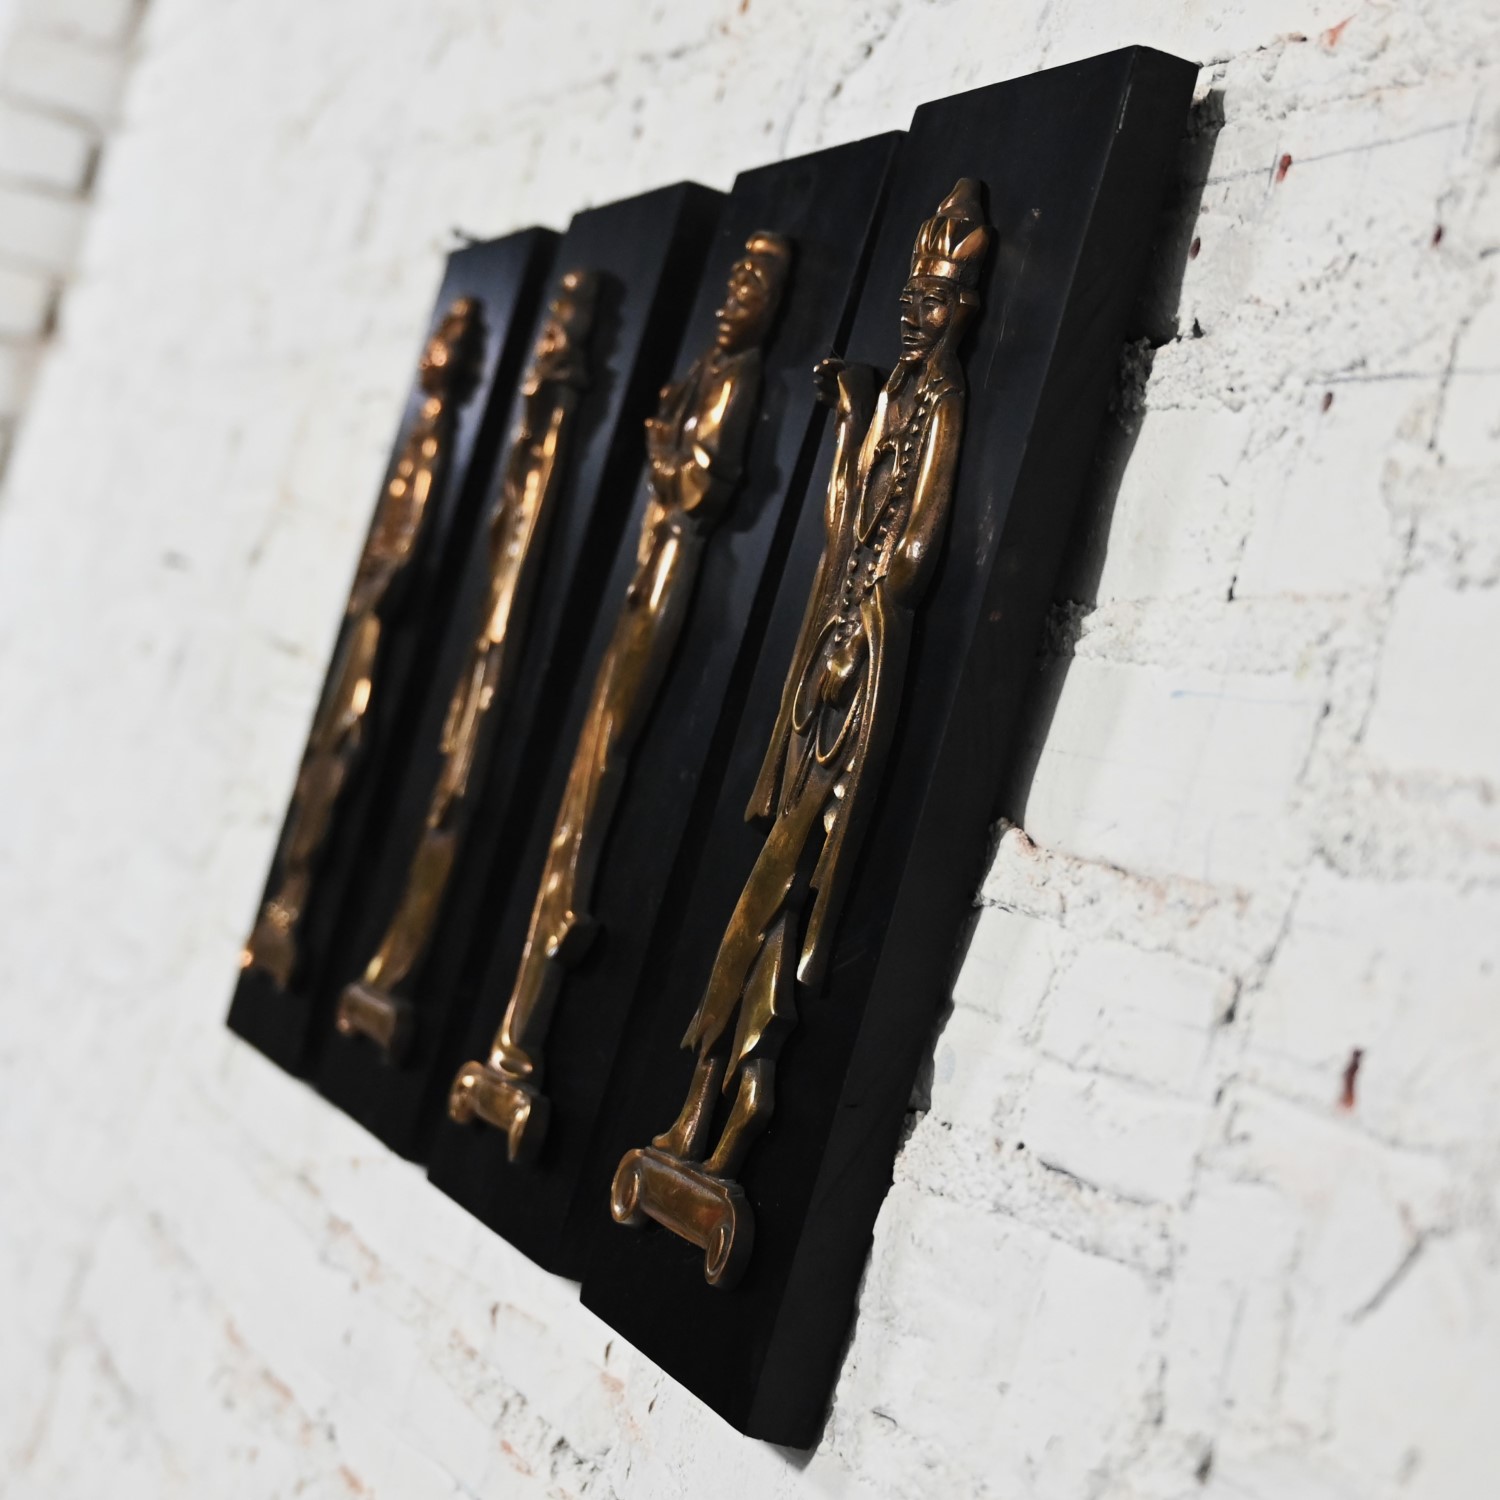 Mid-20th Century Asian Cast Bronze Figures on Black Wood Plaques Signed Gansu Set of 4